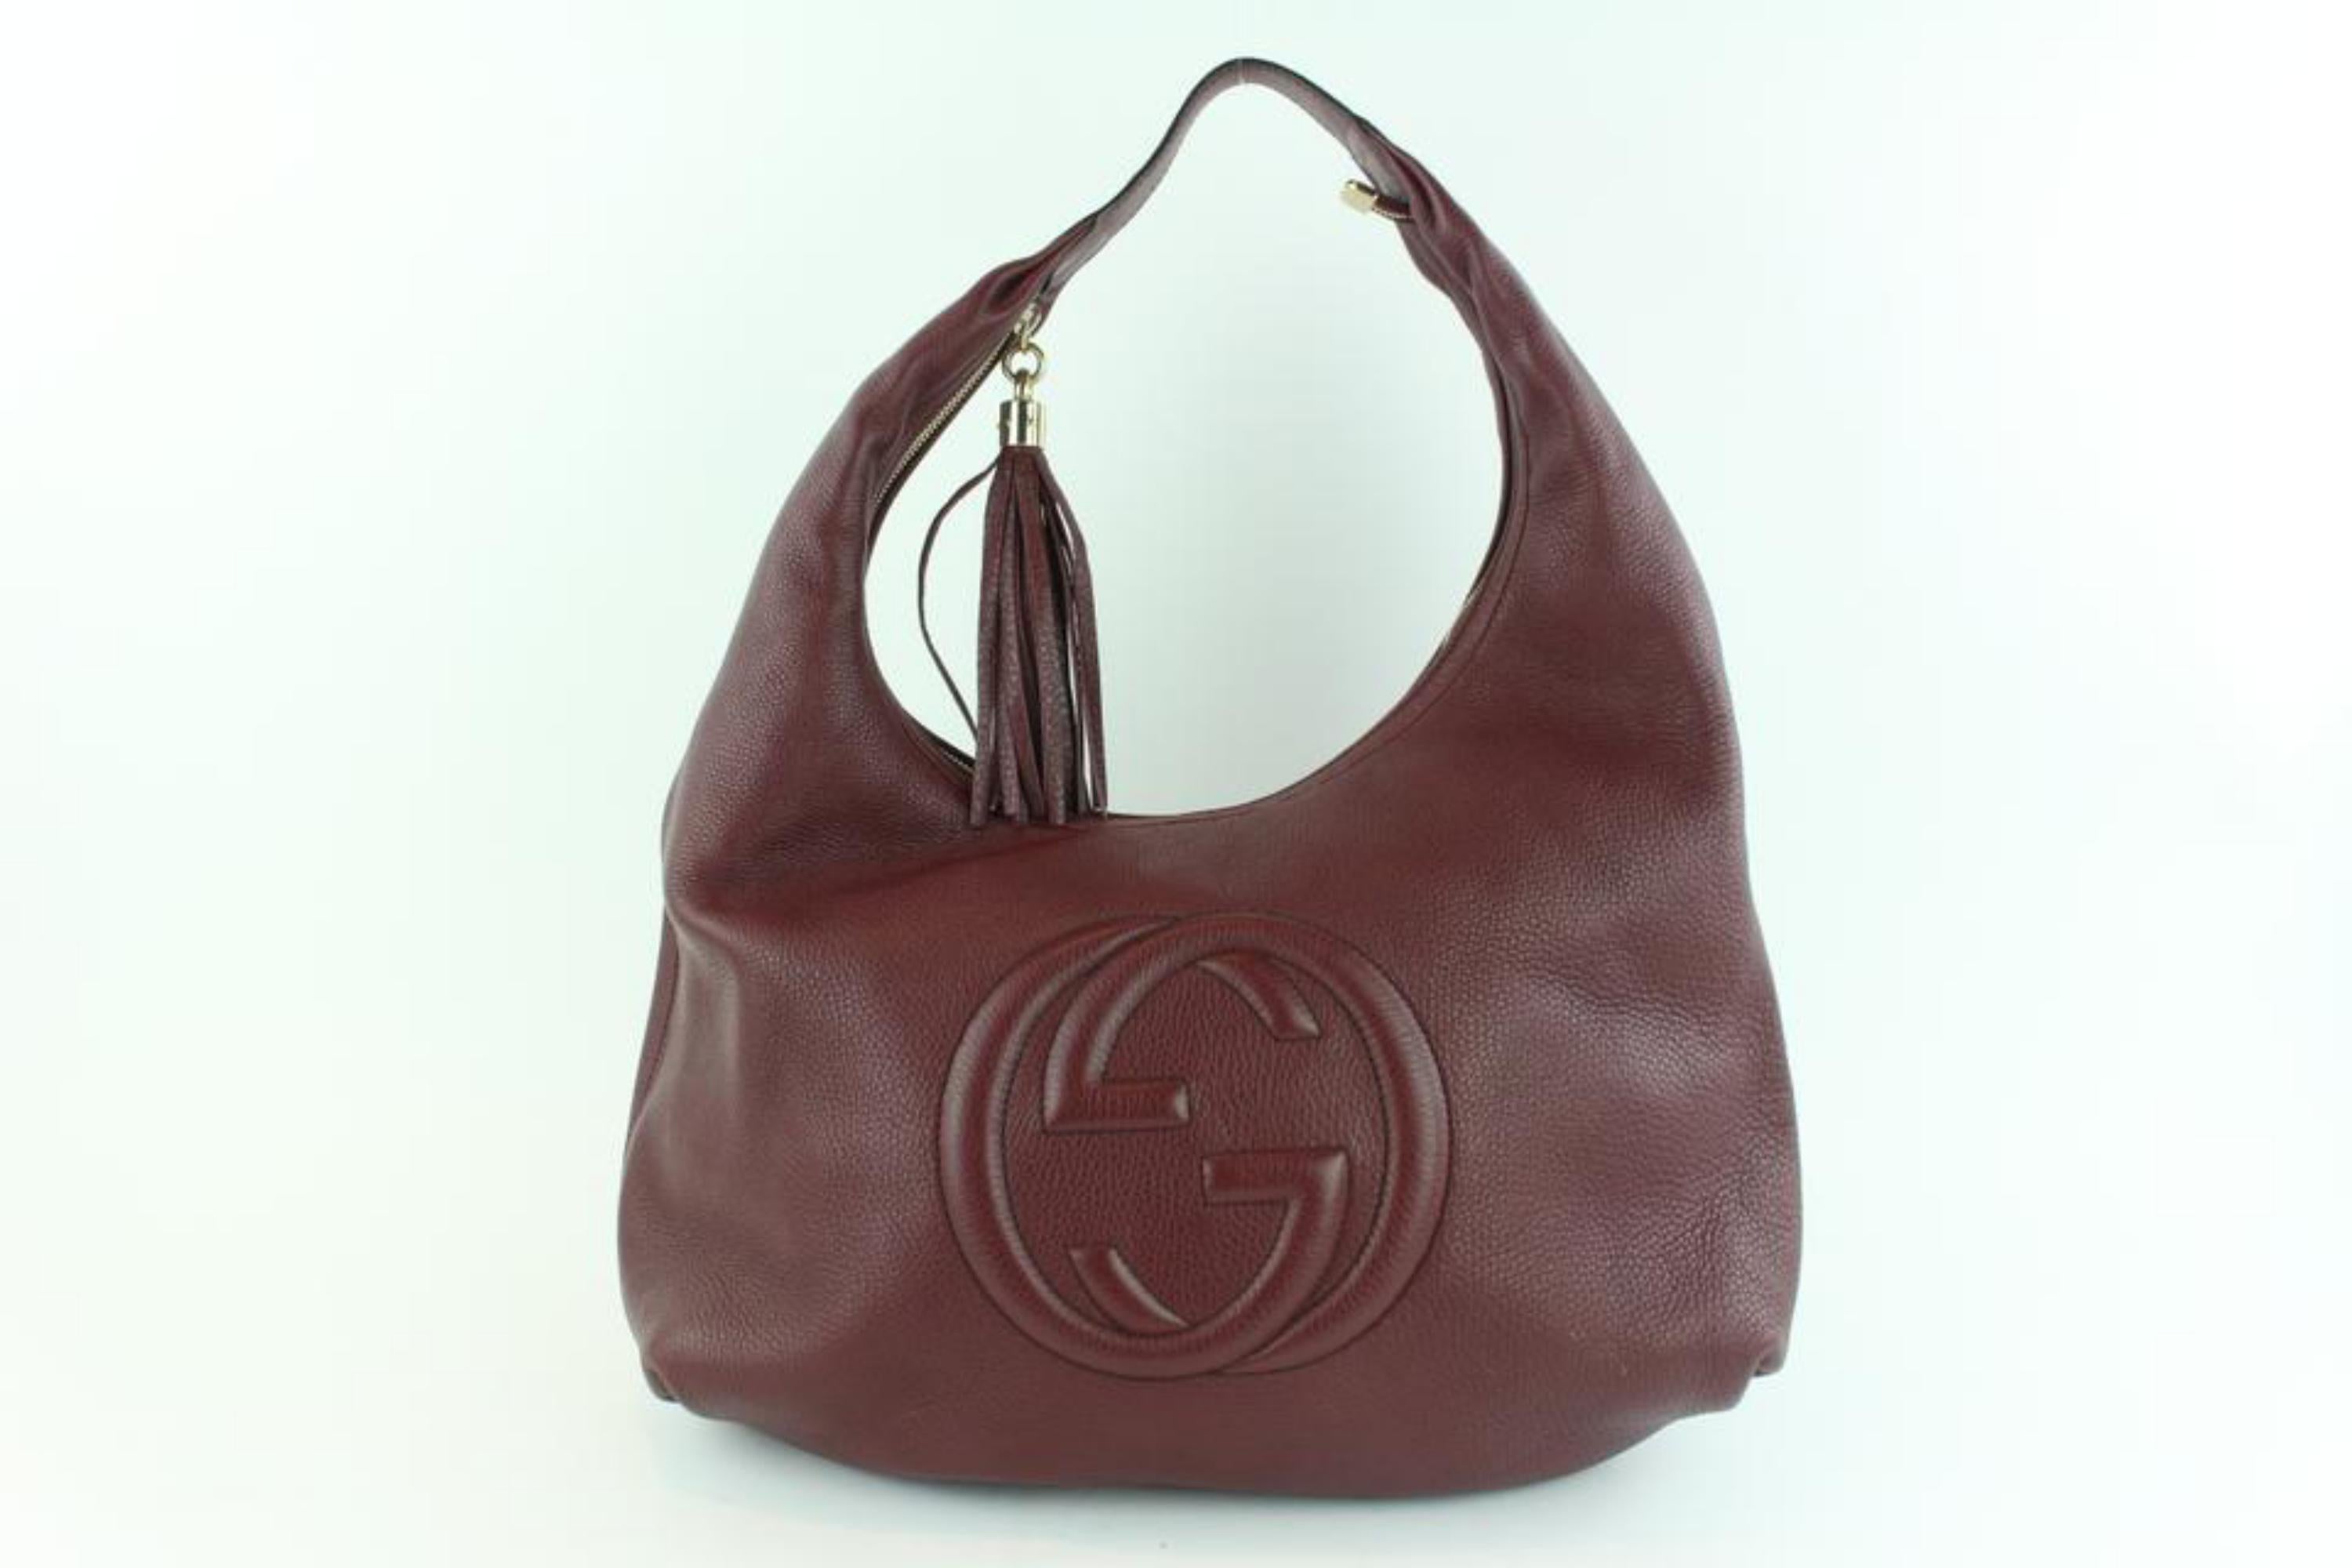 Gucci Soho Large Pebbled Calfskin 17gz1102 Burgundy Leather Hobo Bag For Sale 3